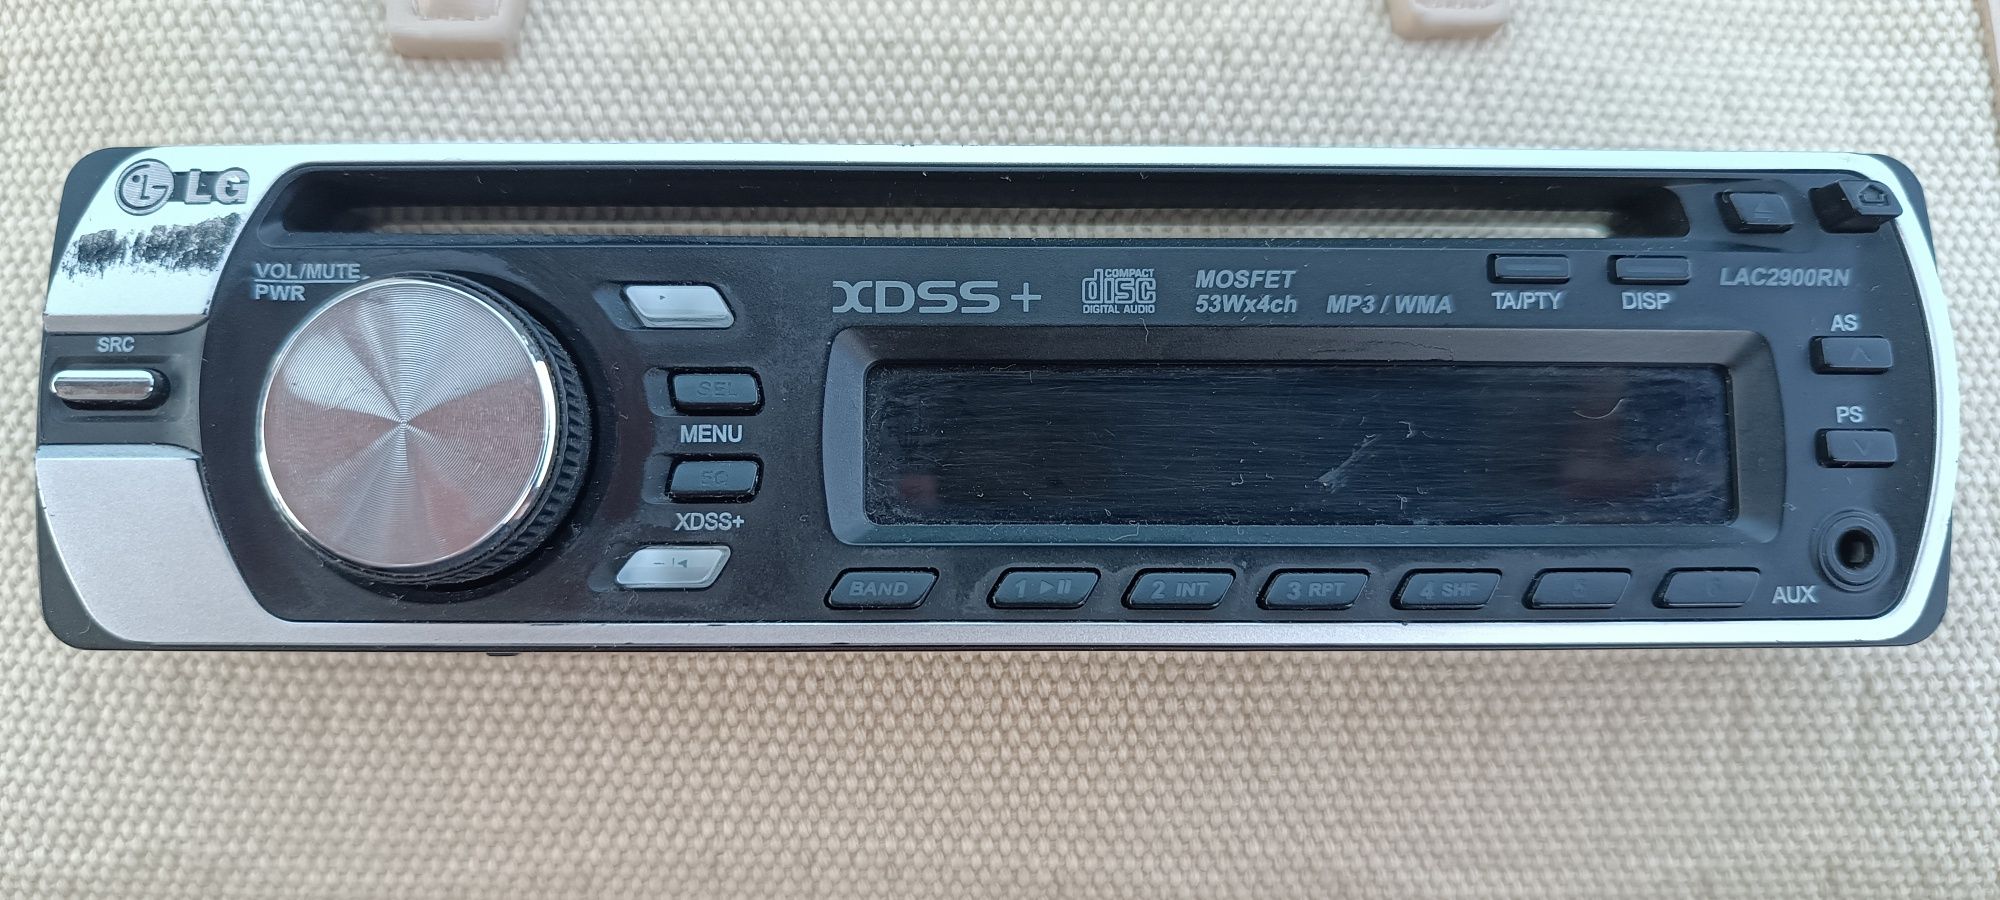 Авто радио  XDSS+ LAC2900RN